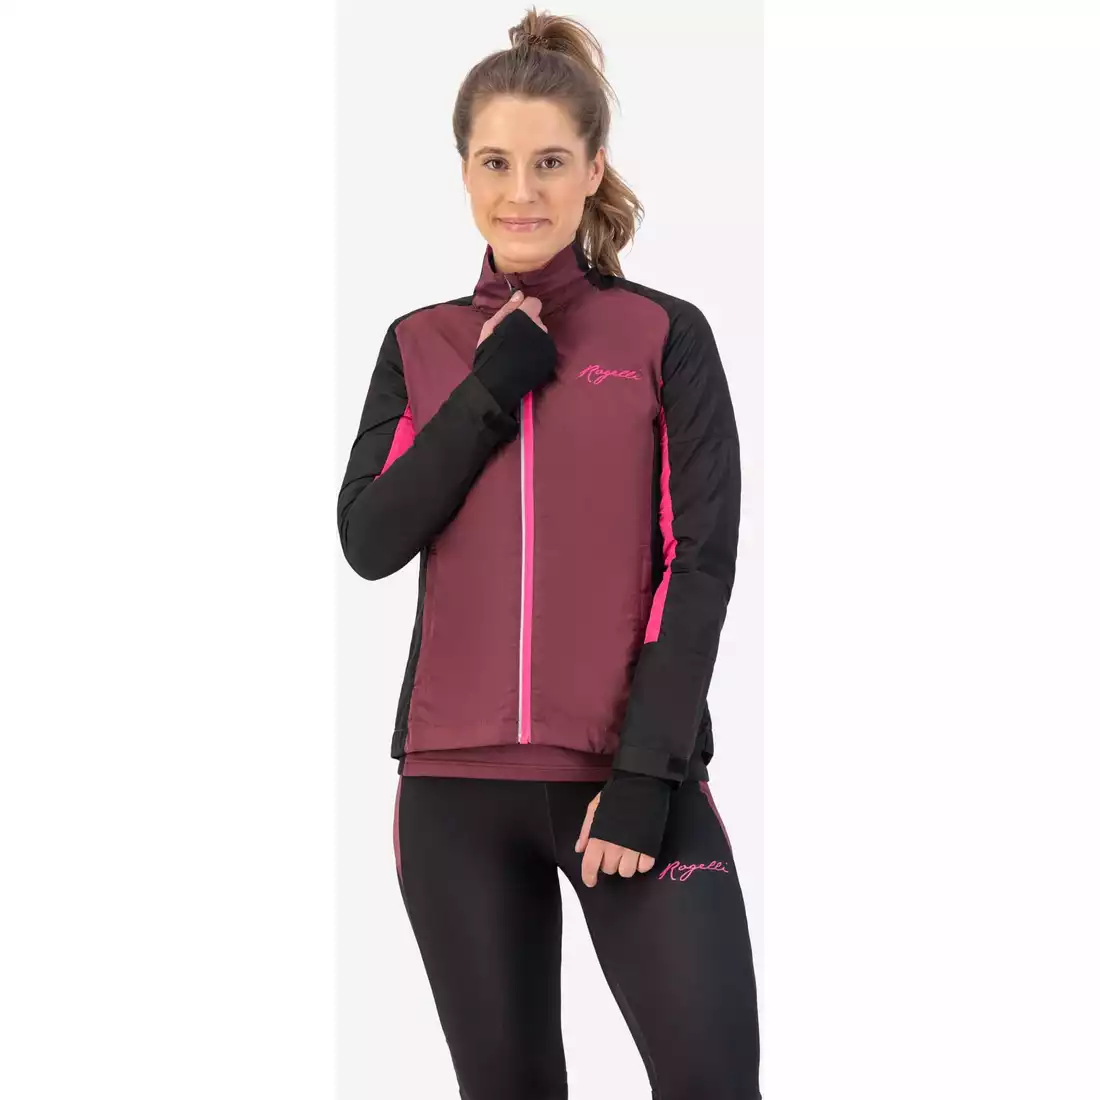 Rogelli ENJOY II women's jacket, windbreaker for running, burgundy-black-pink